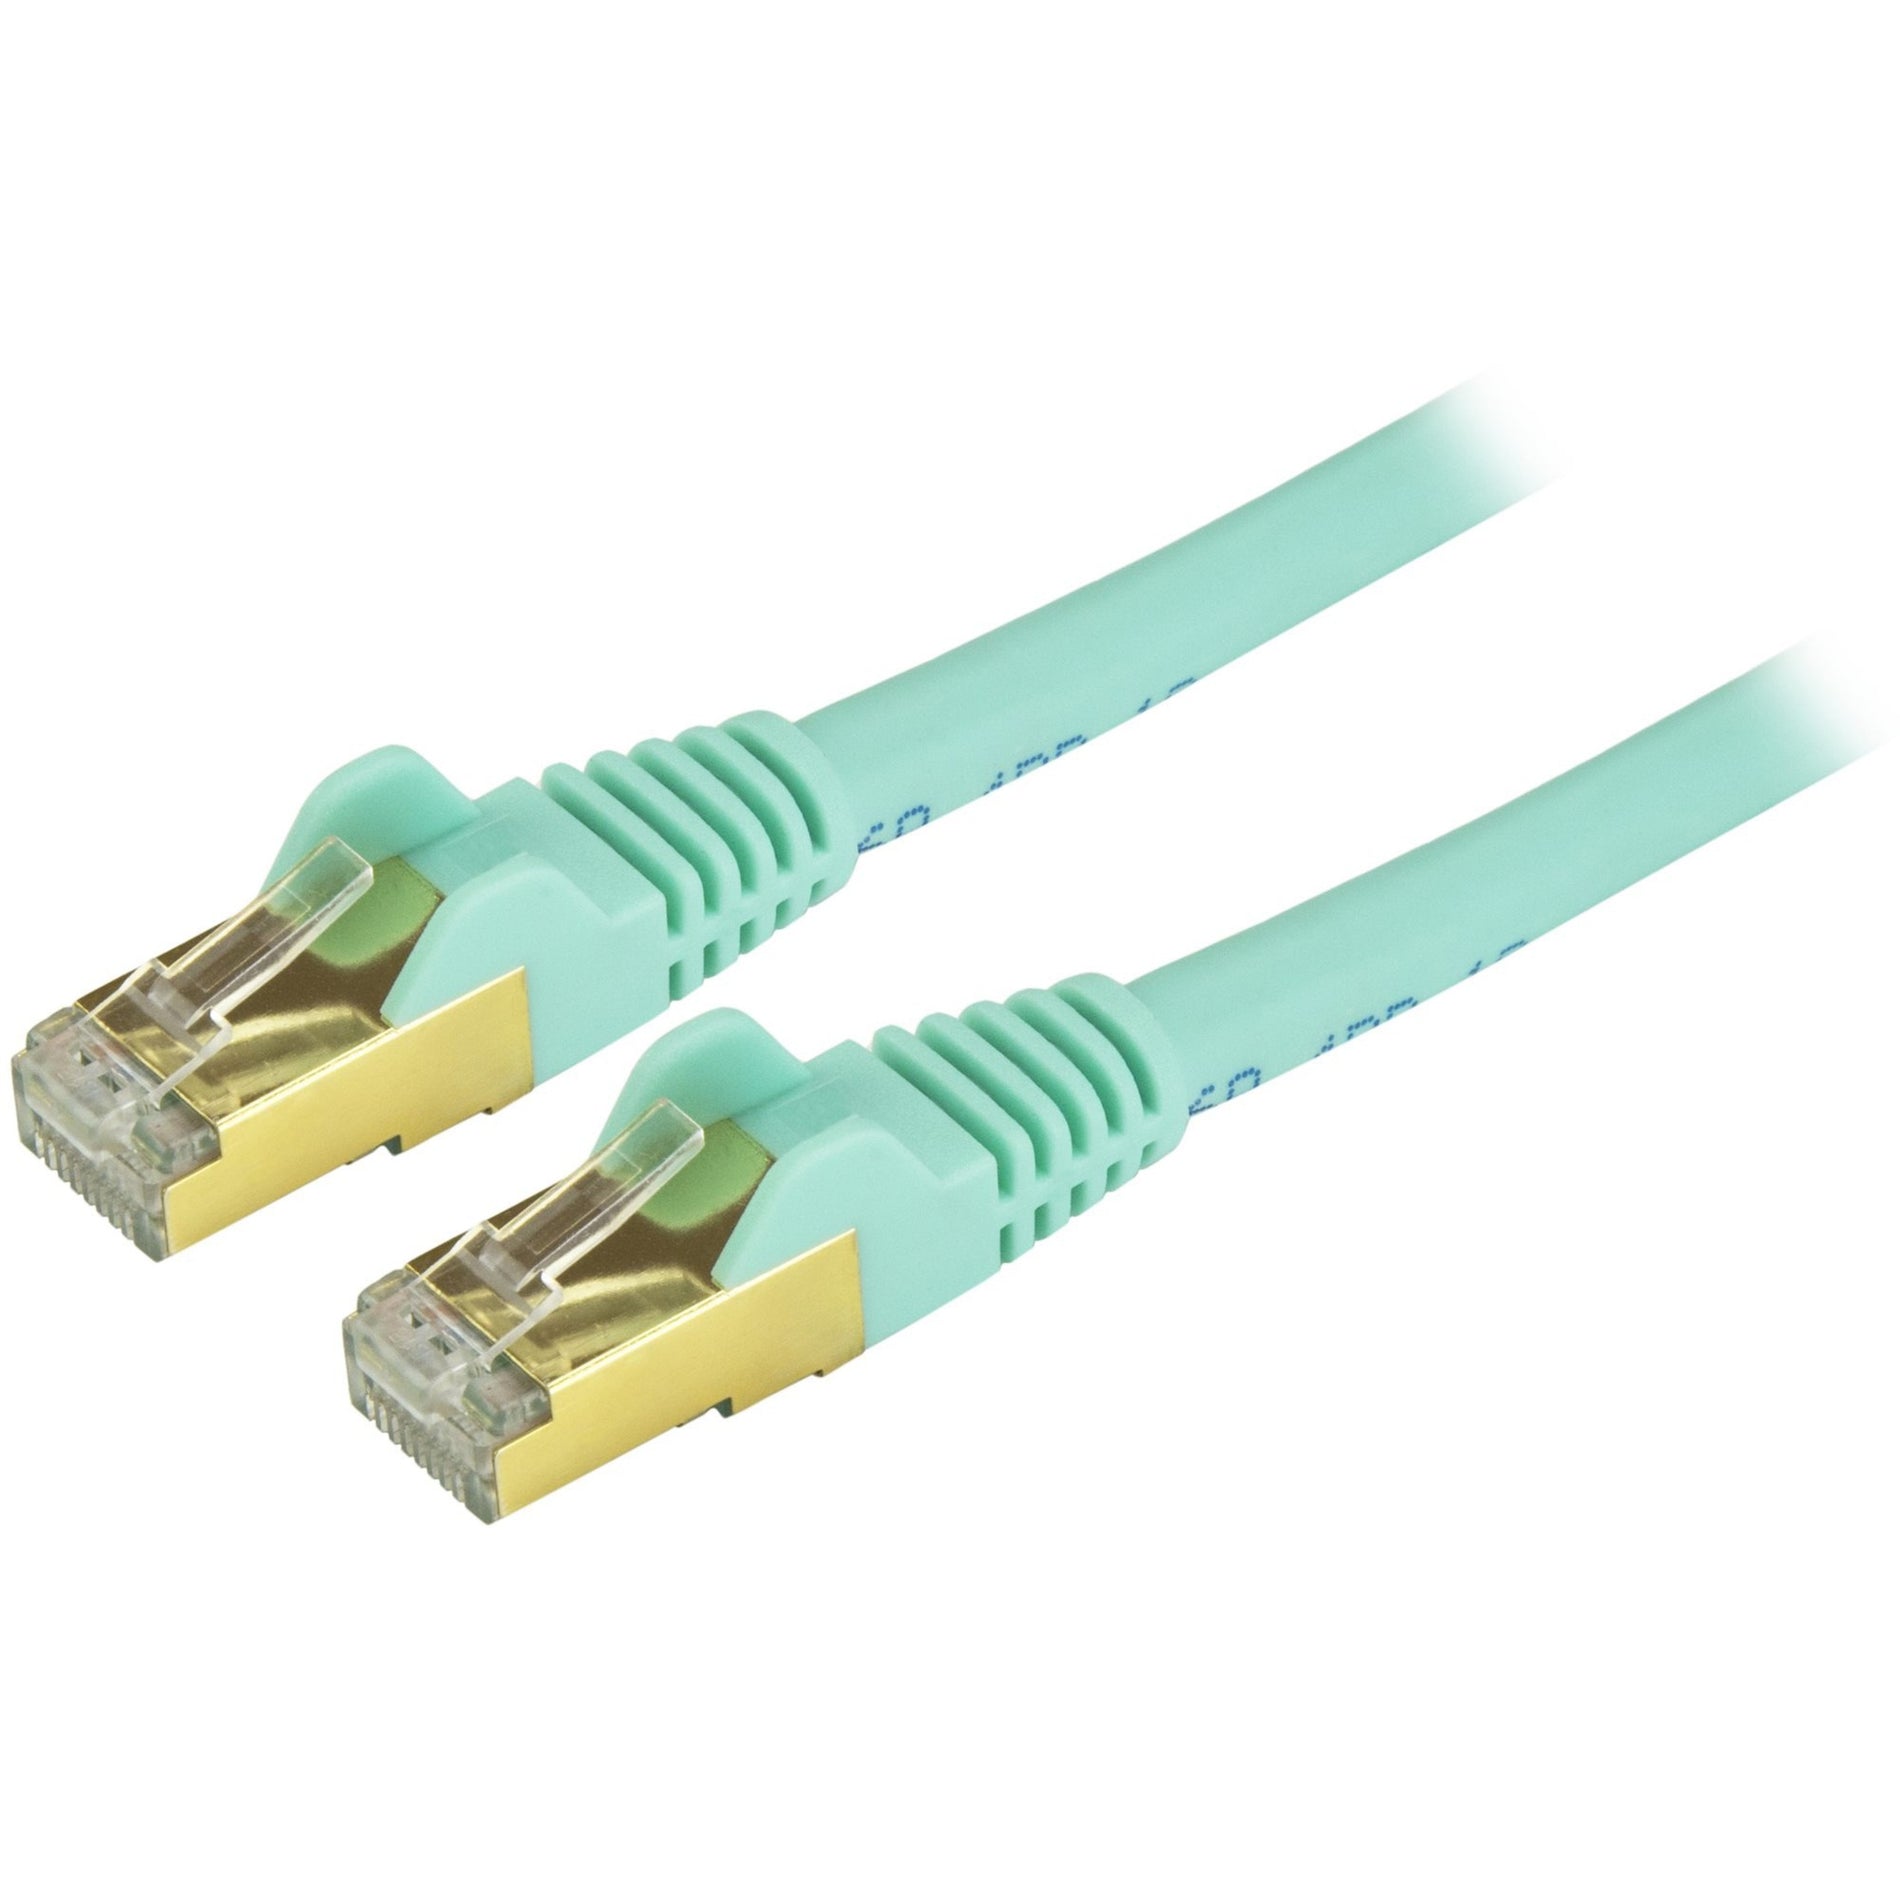 StarTech.com C6ASPAT8AQ Cat6a Ethernet Patch Cable - Shielded (STP) - 8 ft. Aqua Snagless RJ45 Ethernet Cord